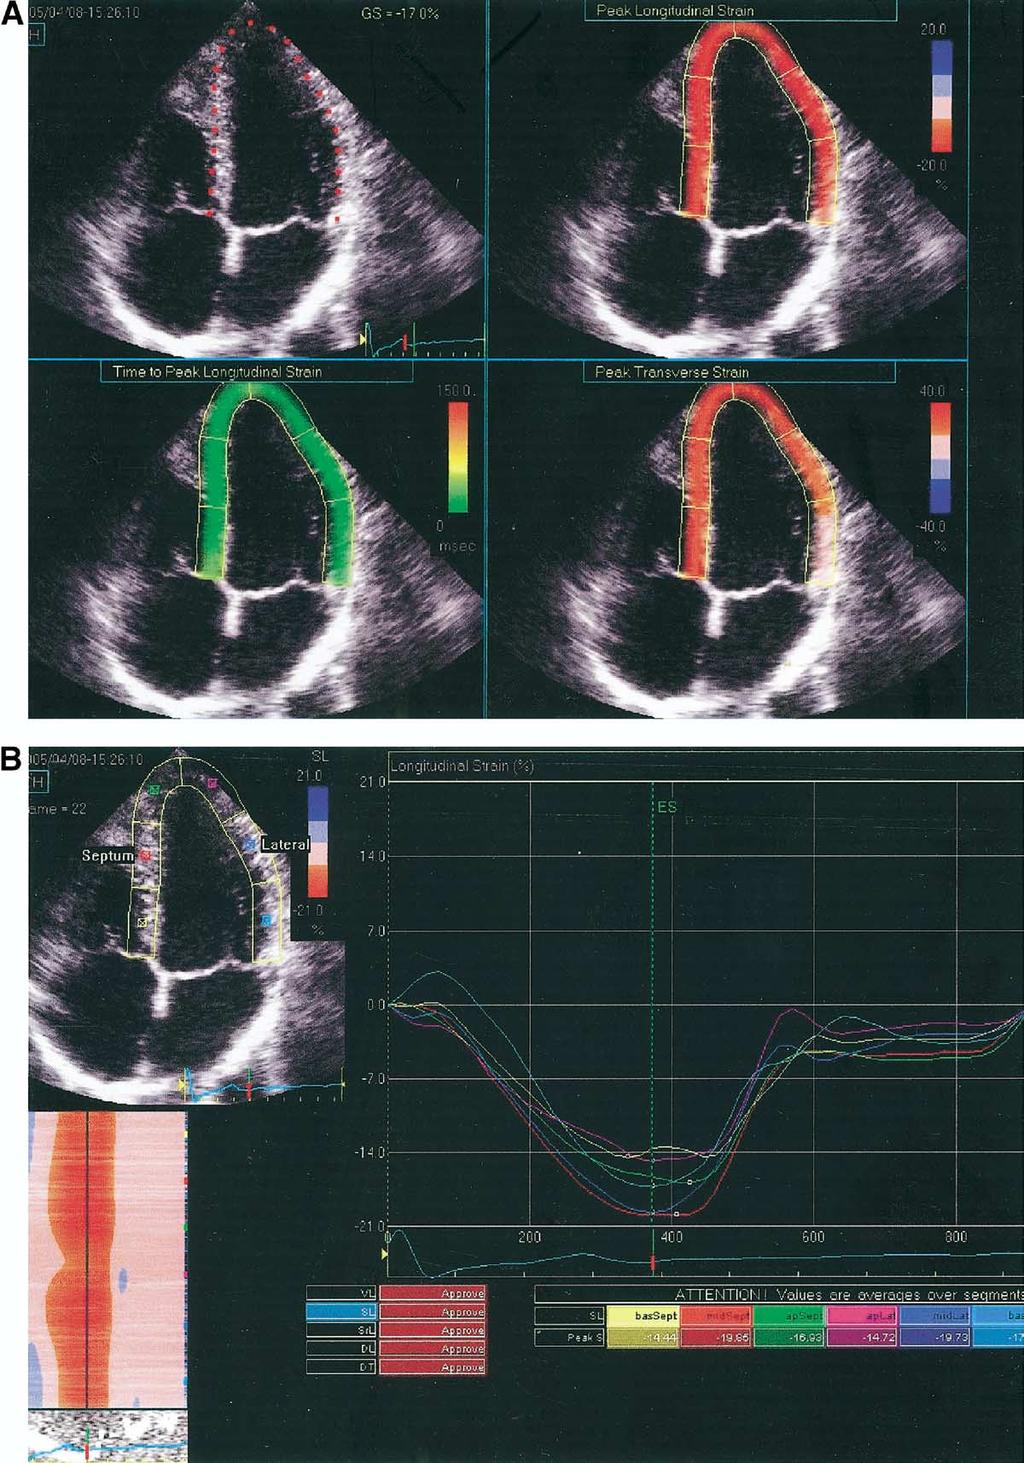 JACC Vol. 47, No. 6, 2006 March 21, 2006:1175 81 Serri et al. Strain in Hypertrophic Cardiomyopathy 1177 Figure 2.